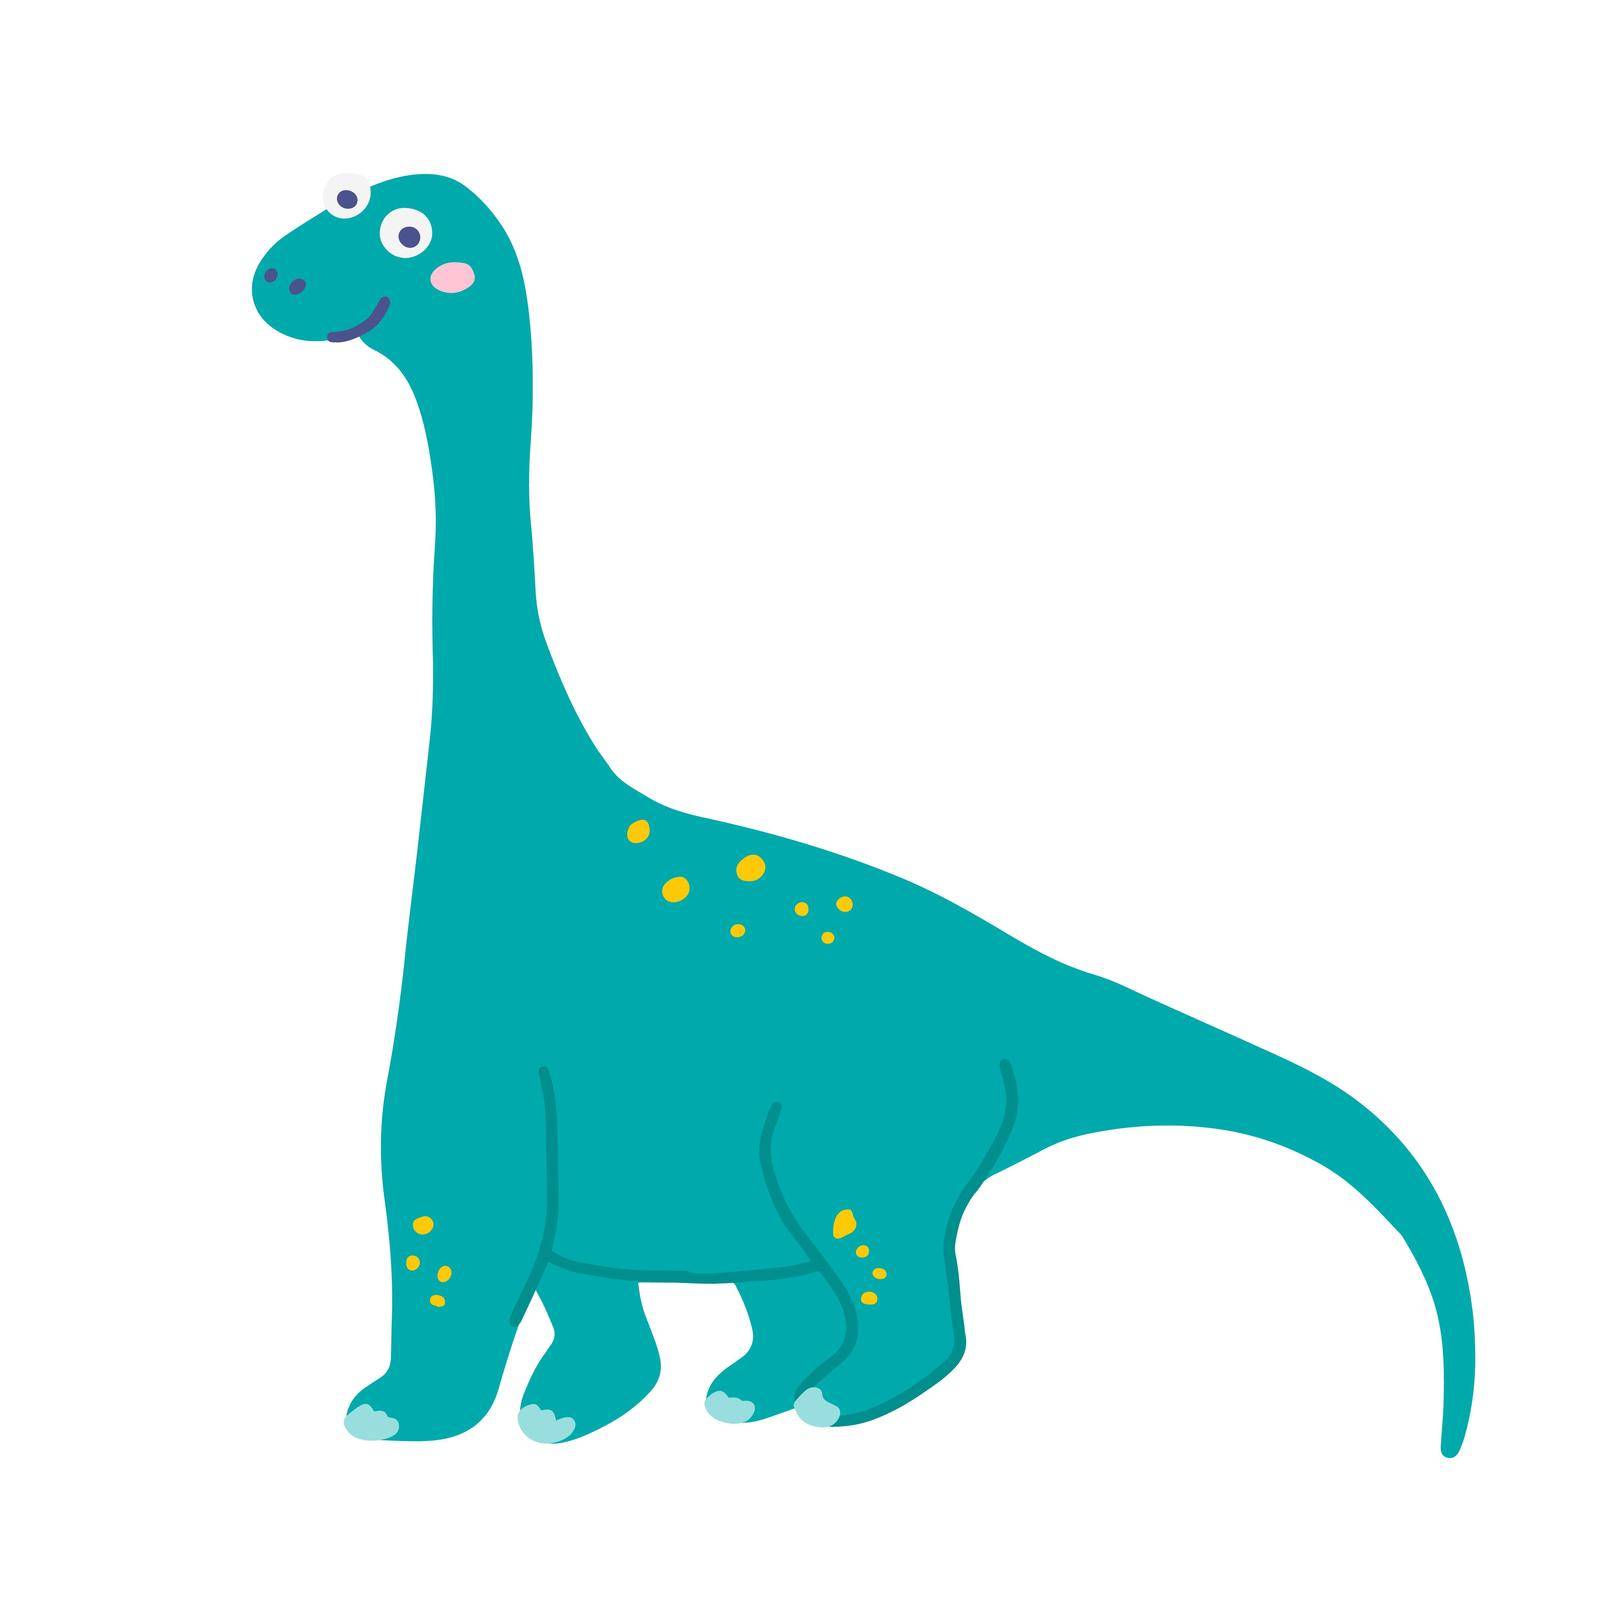 Cute herbivorous dinosaur Brachiosaurus, vector flat illustration in hand drawn style on white background.